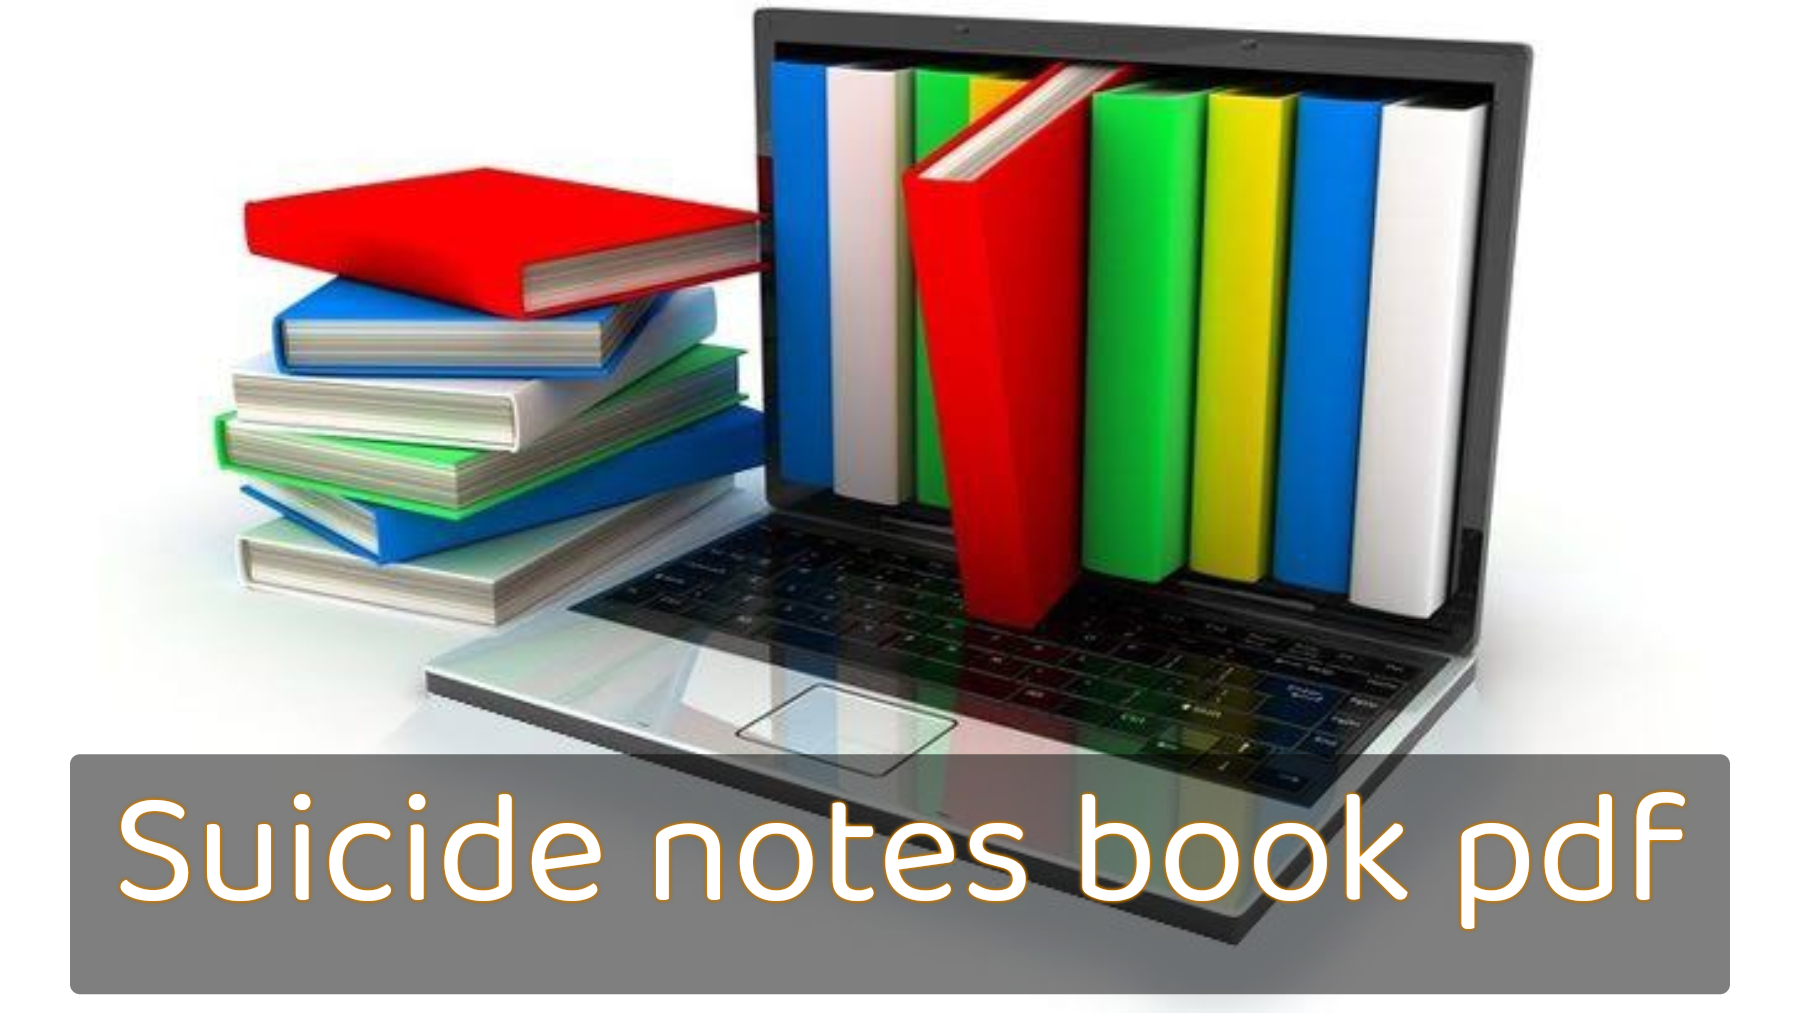 Suicide notes book pdf, Suicide notes book, Suicide notes book pdf free download, Suicide notes book pdf download